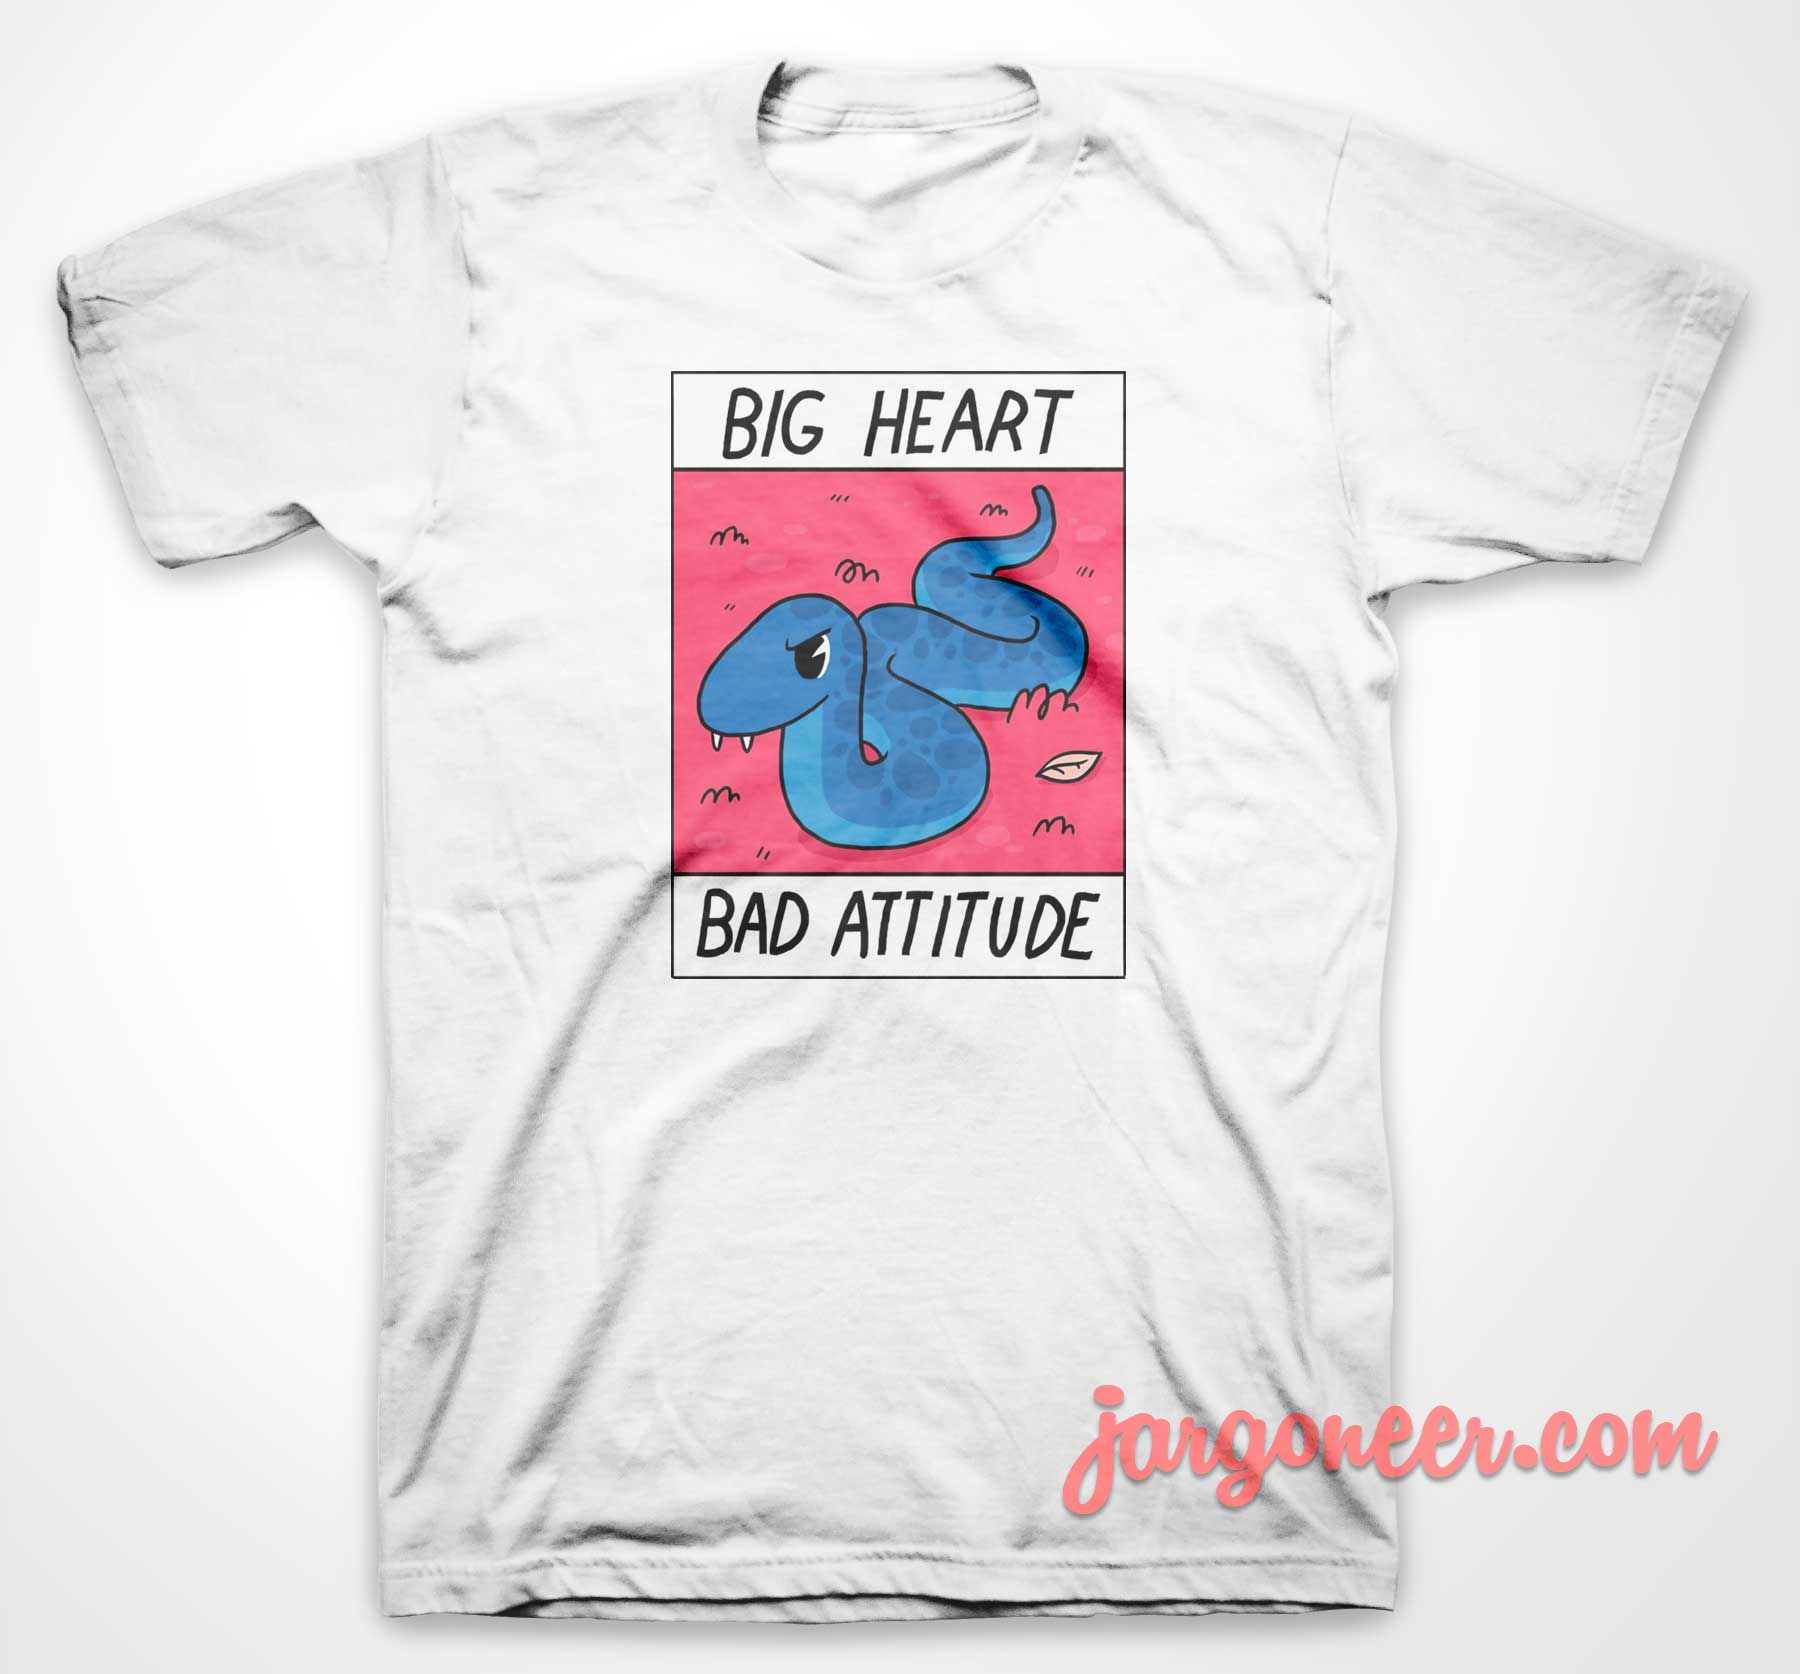 Gig Heart Bad Attitude 3 - Shop Unique Graphic Cool Shirt Designs